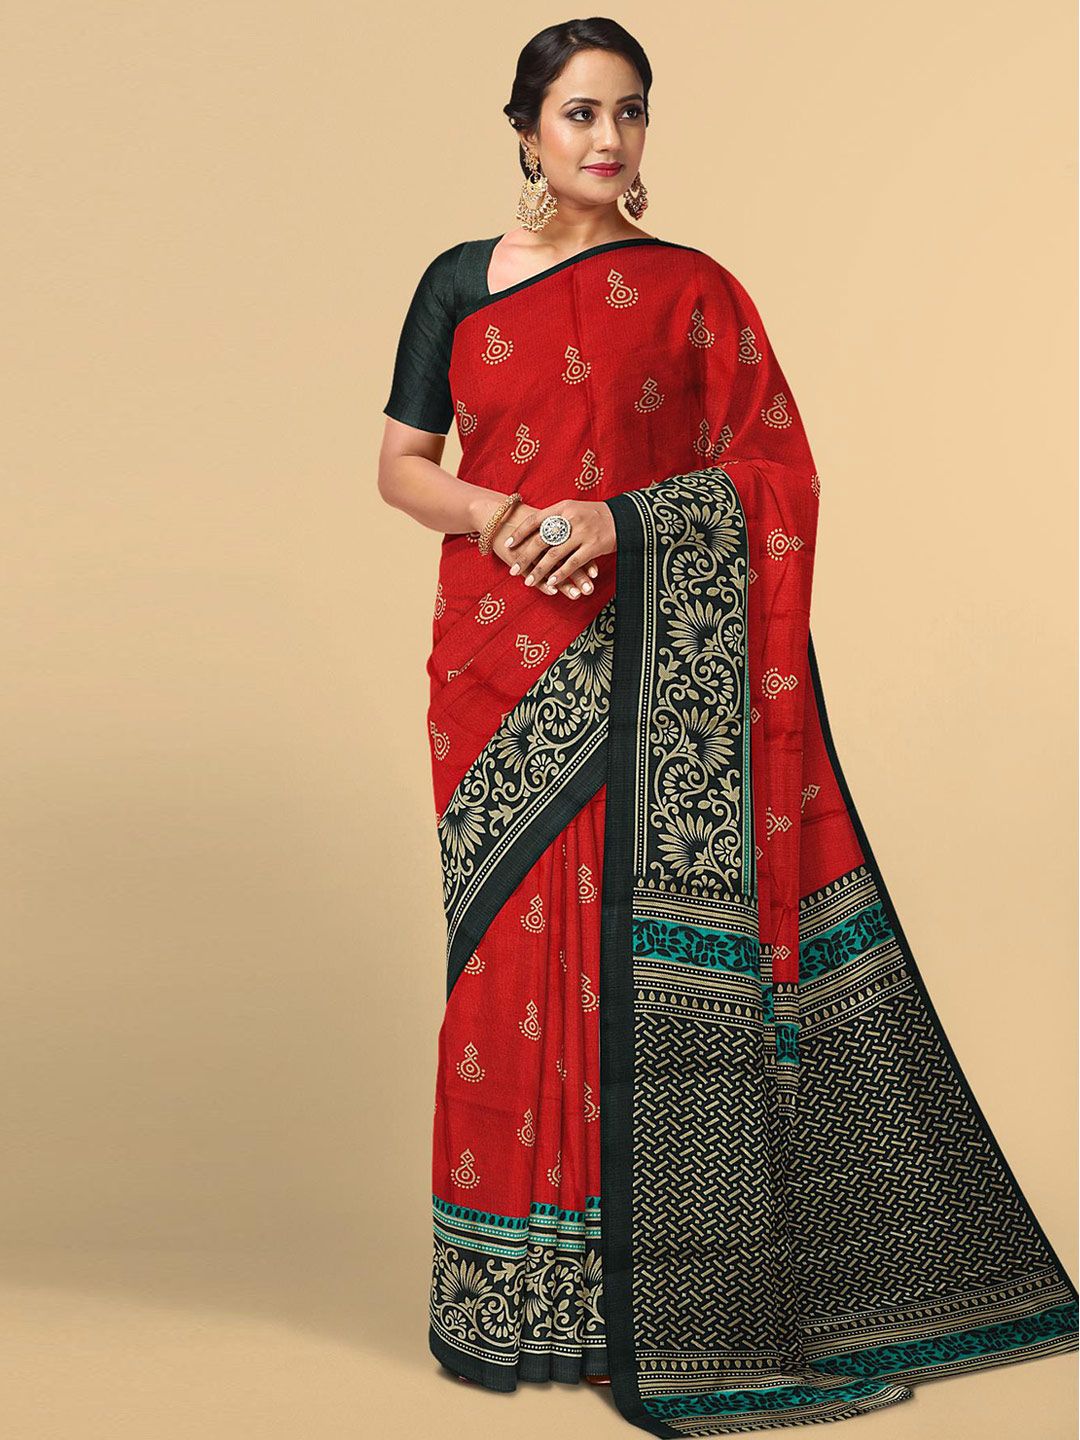 Kalamandir Red & Black Ethnic Motifs Silk Blend Saree Price in India